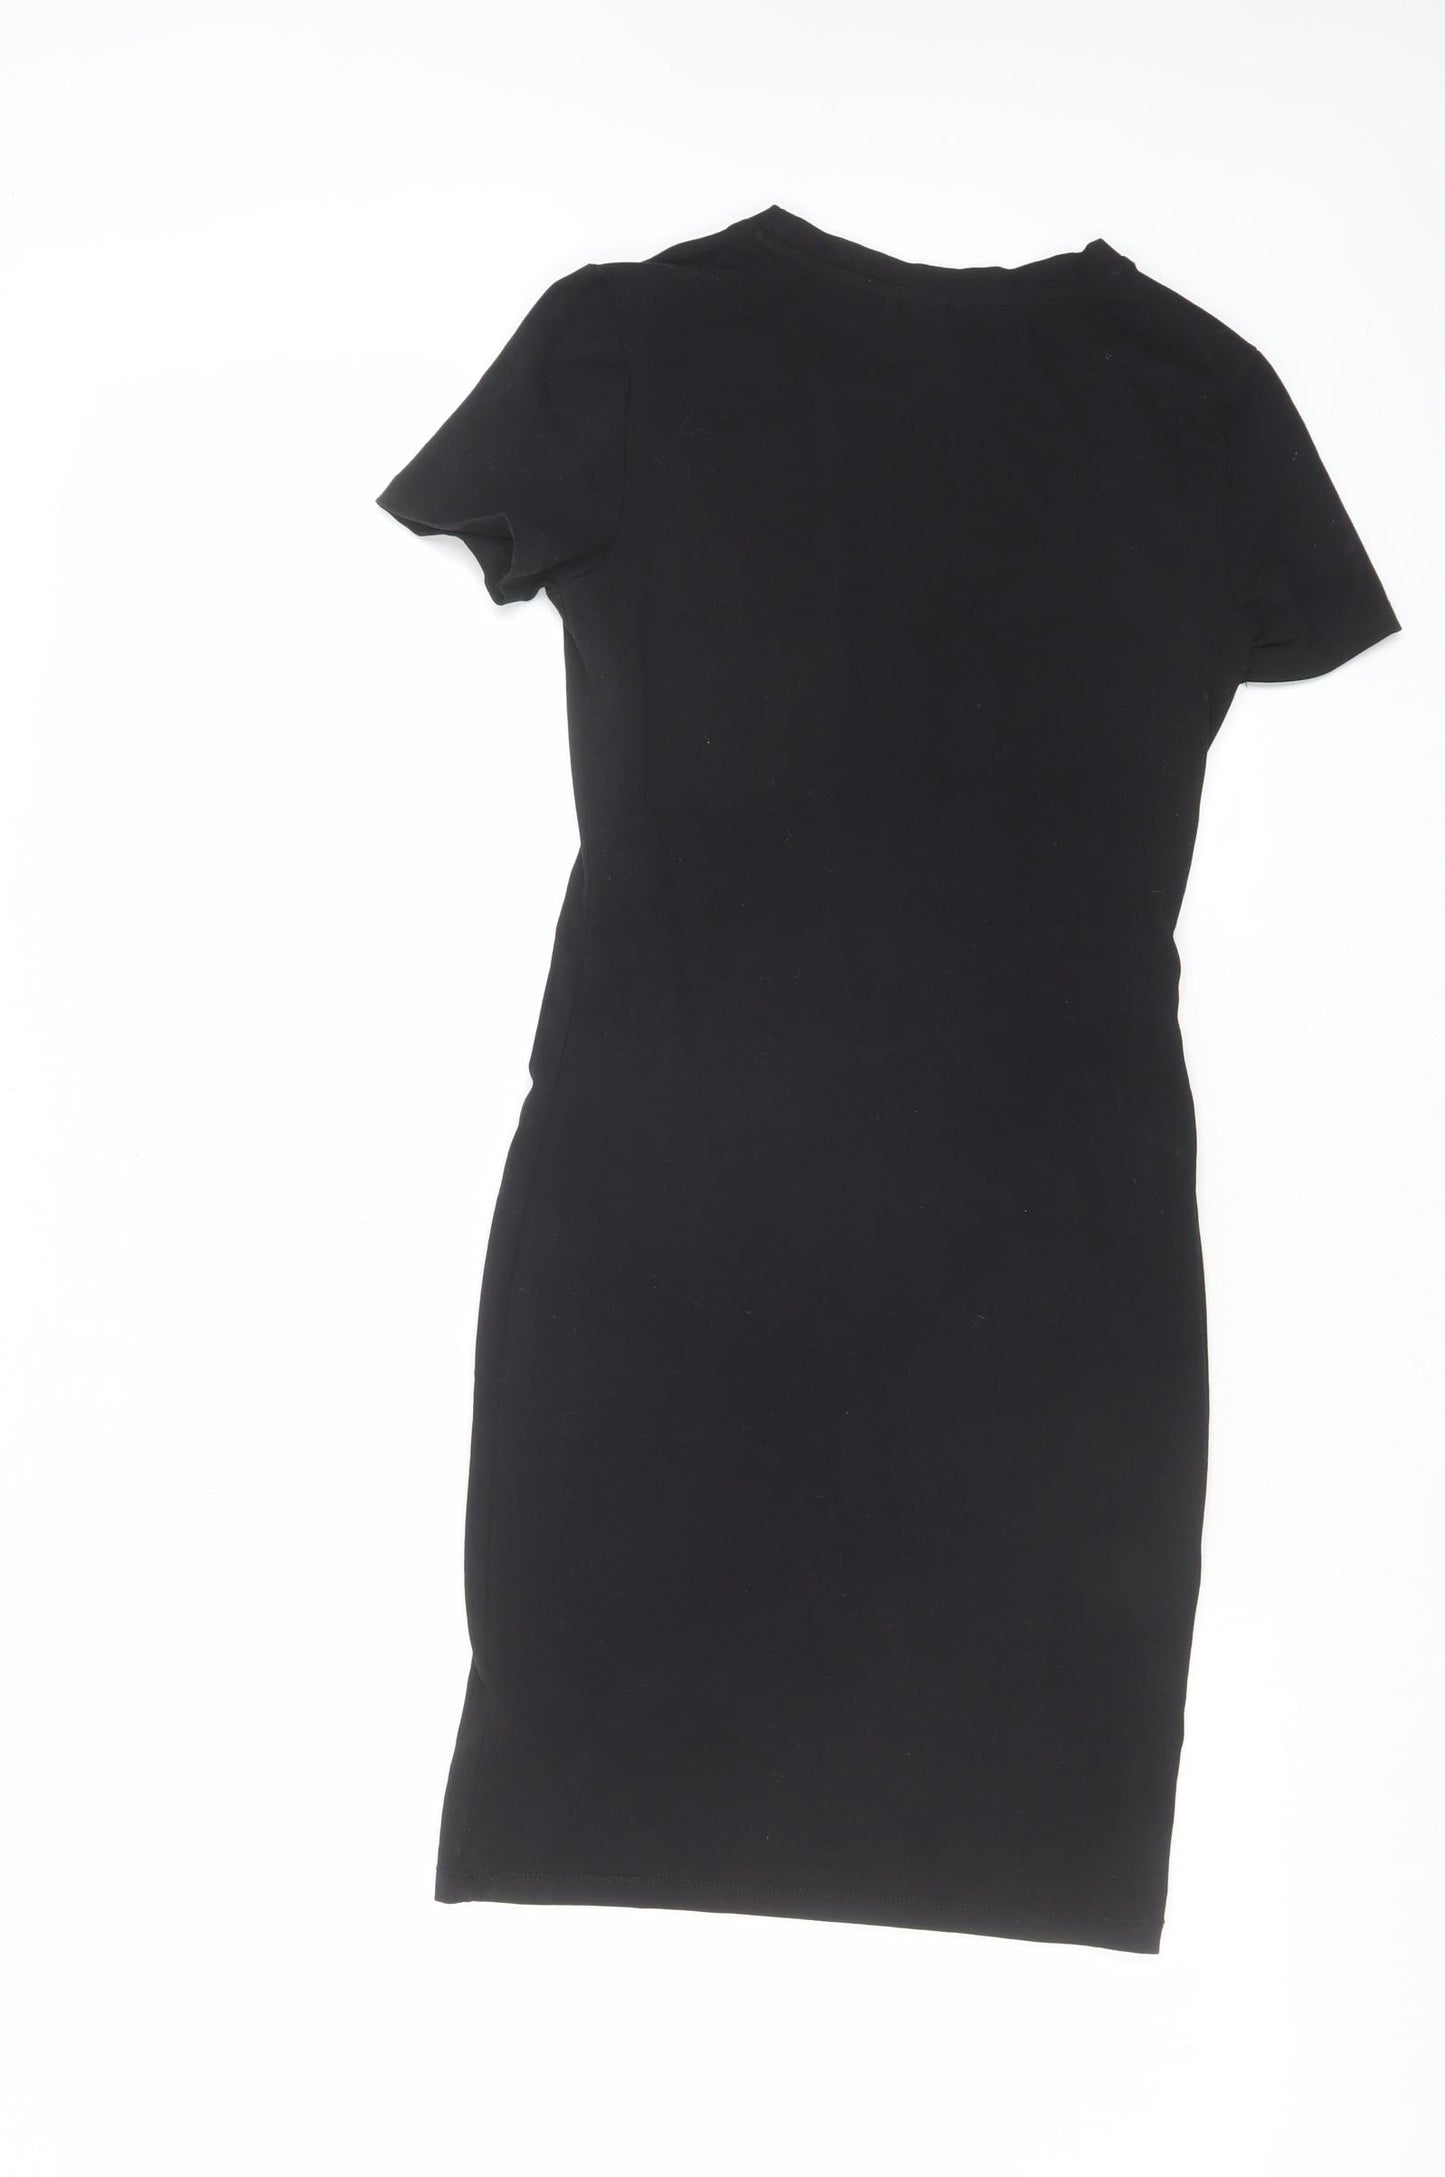 H&M Womens Black Cotton Bodycon Size S Round Neck Pullover